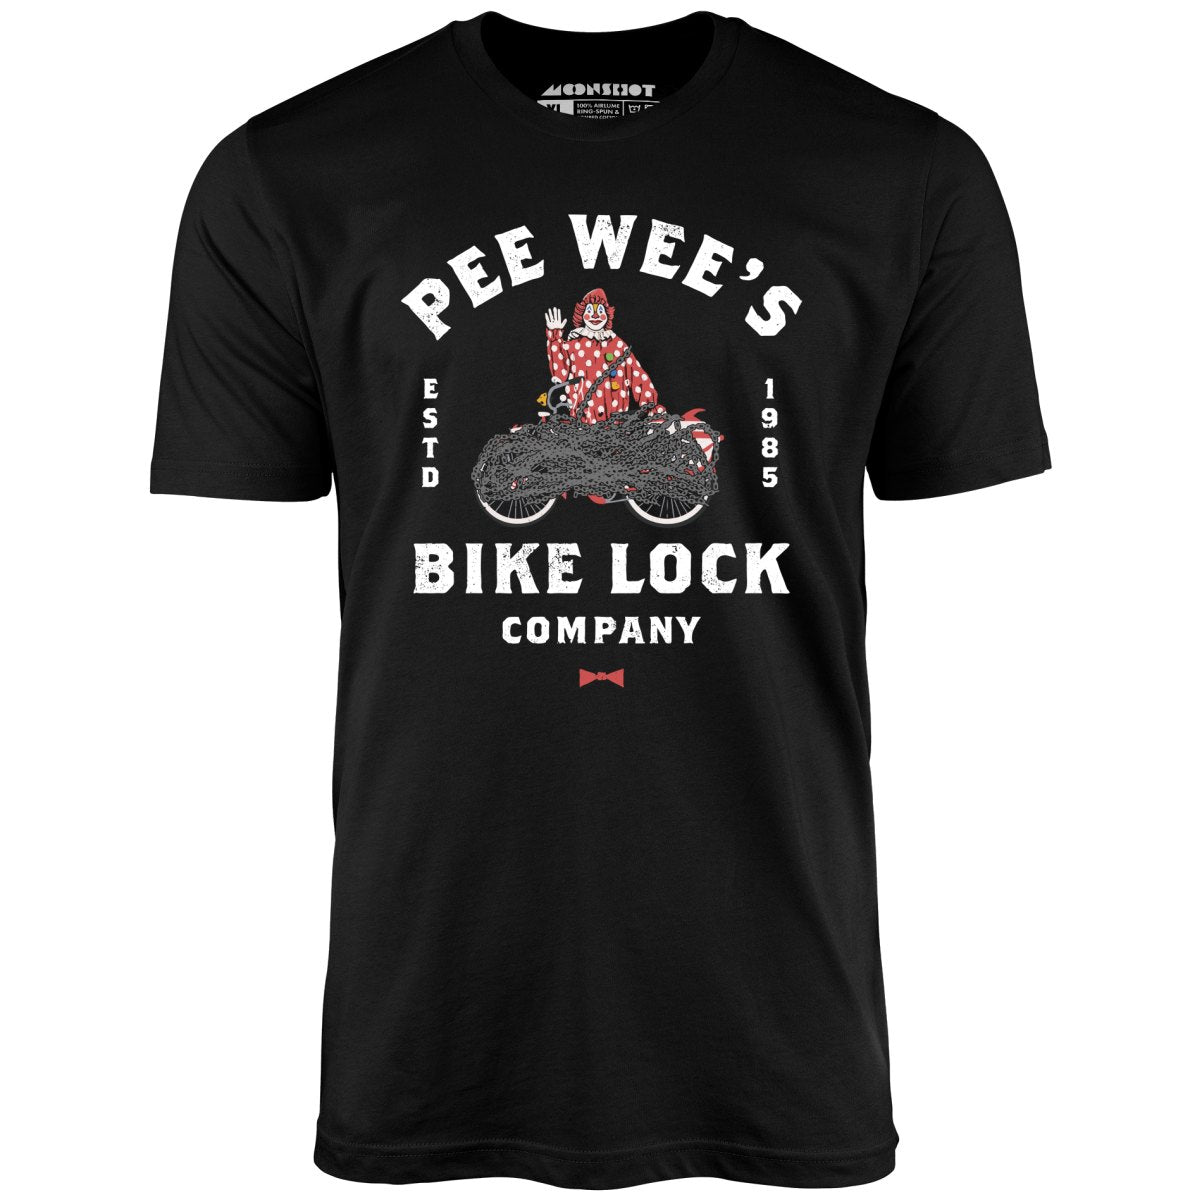 Pee Wee's Bike Lock Company - Unisex T-Shirt